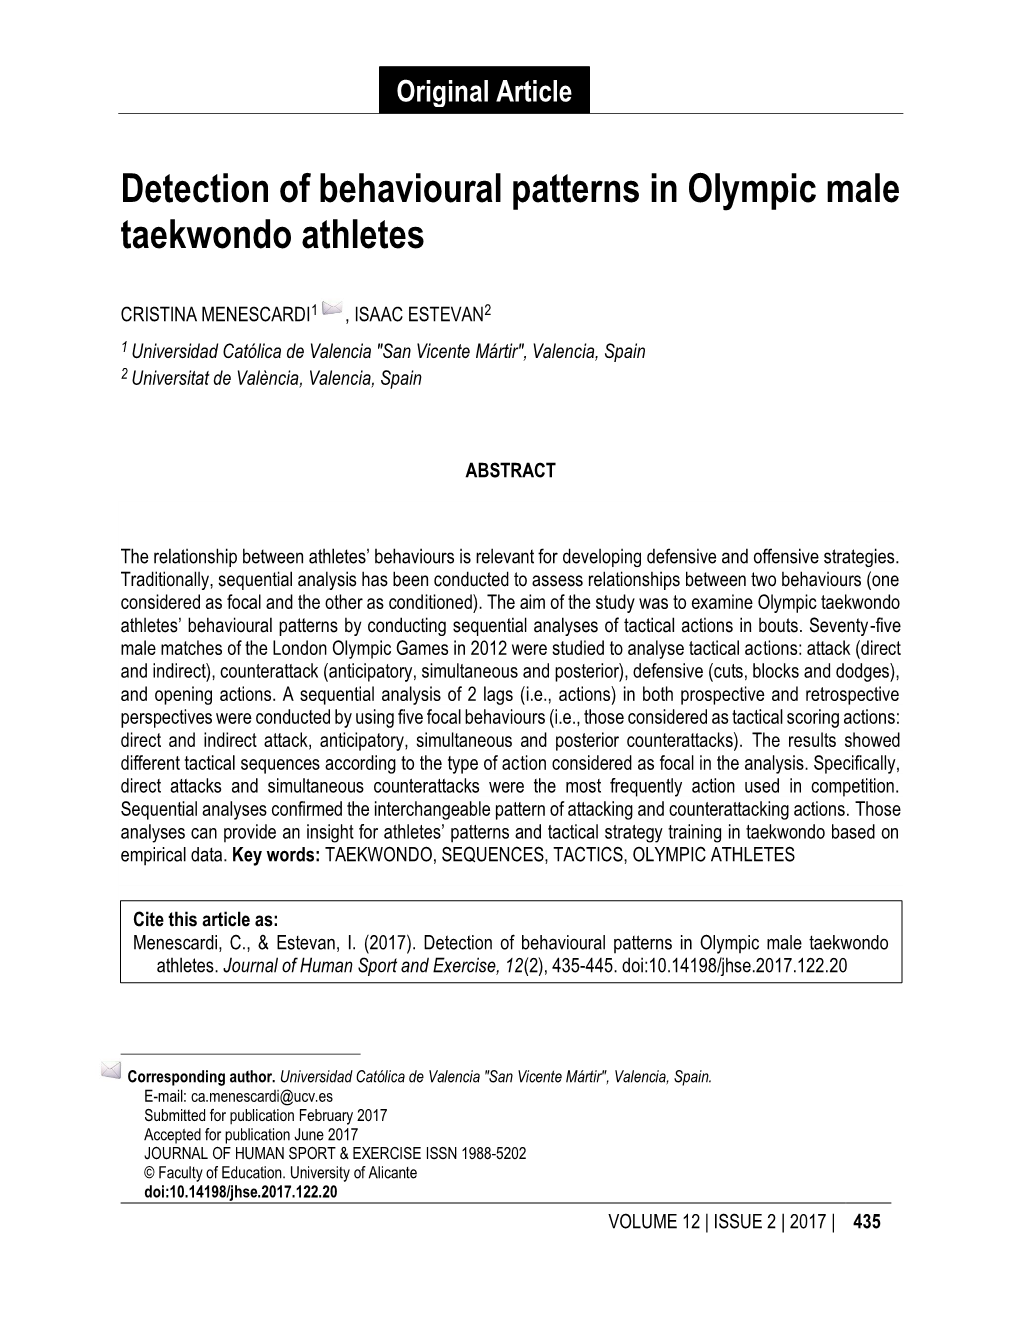 Detection of Behavioural Patterns in Olympic Male Taekwondo Athletes